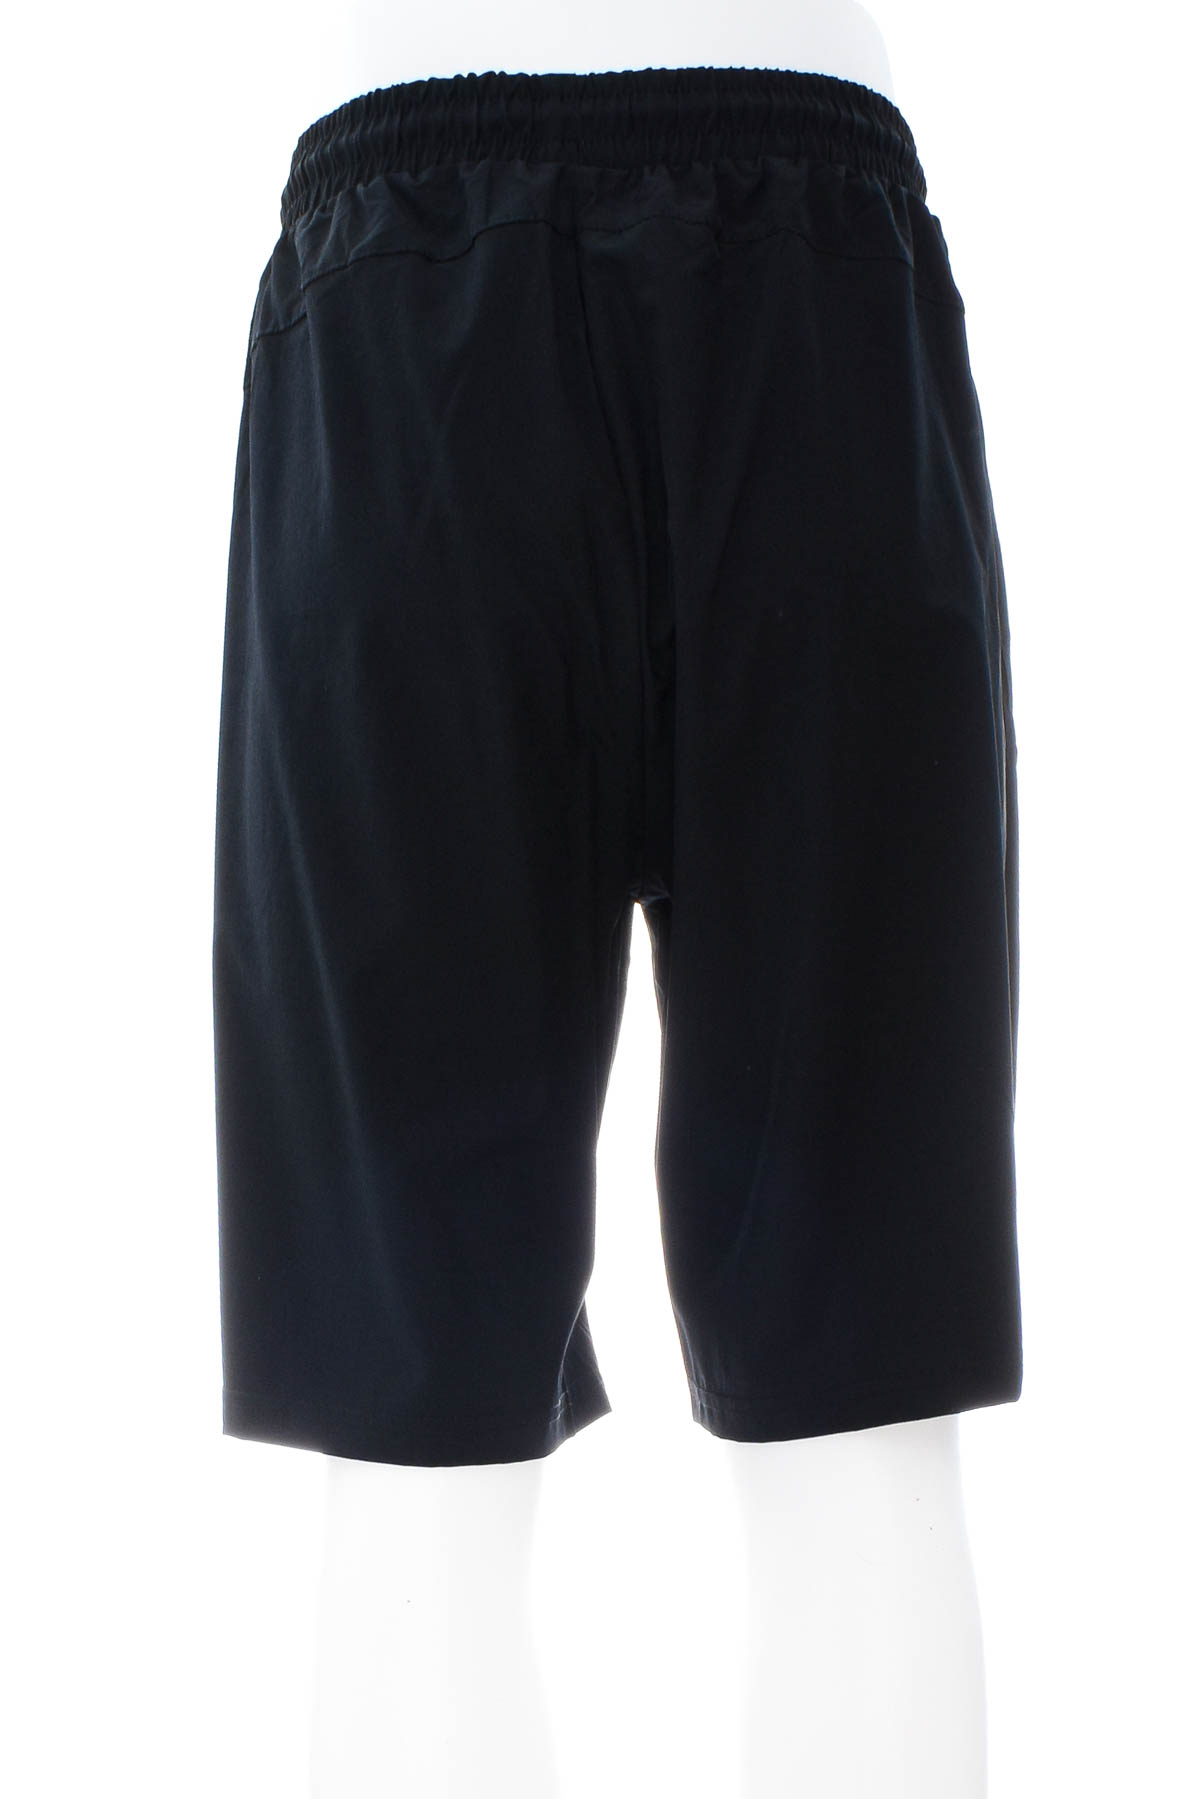 Men's shorts - Crane - 1